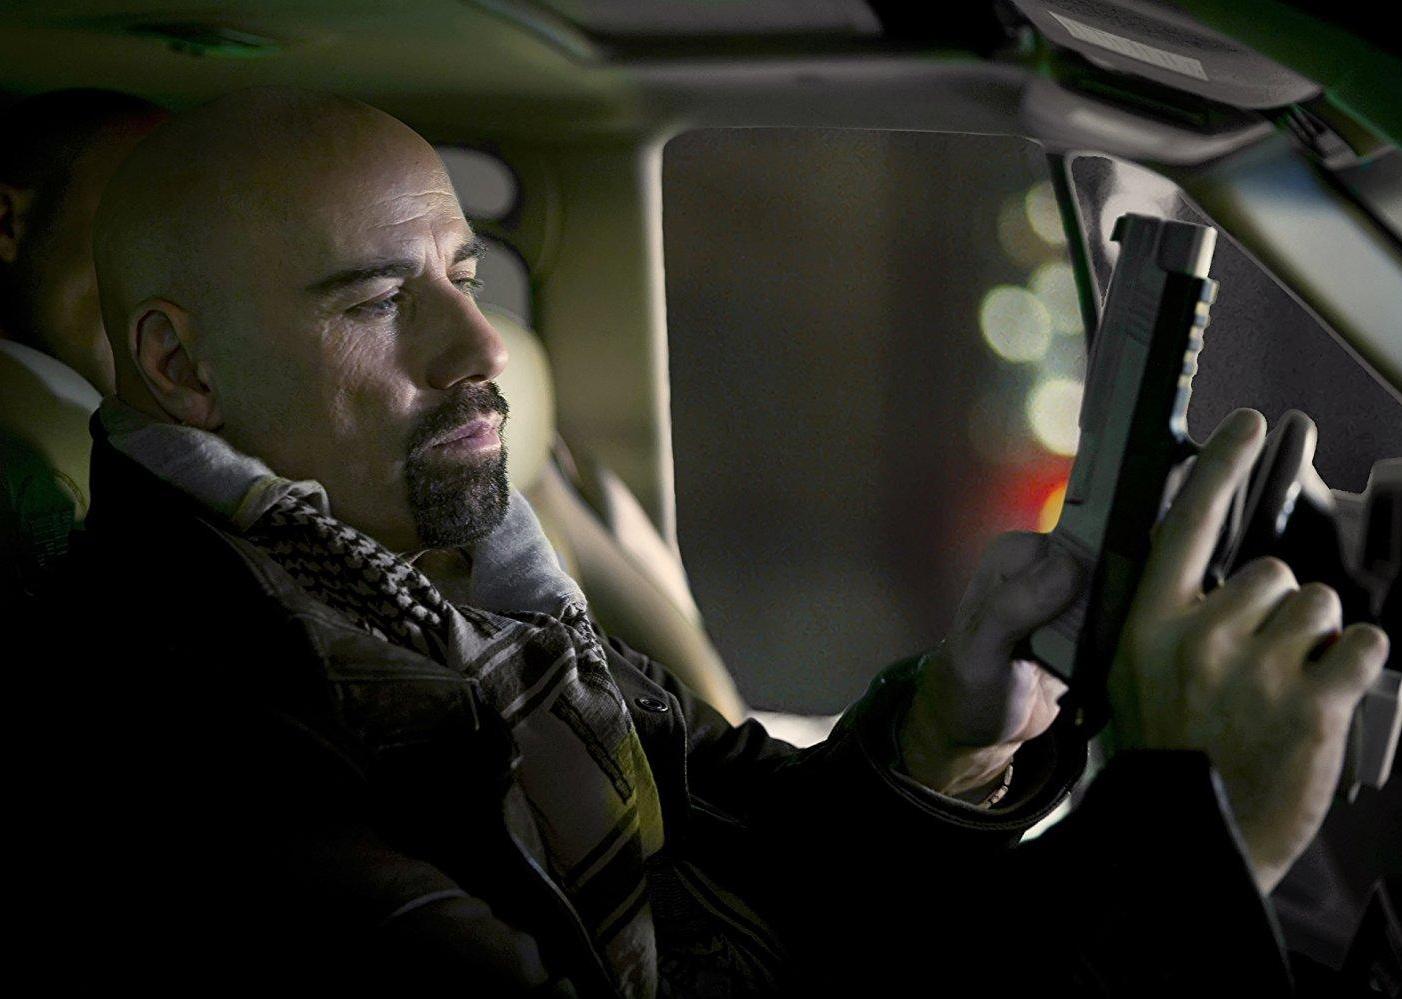 John Travolta, with a shaved head, holding a gun inside a vehicle.